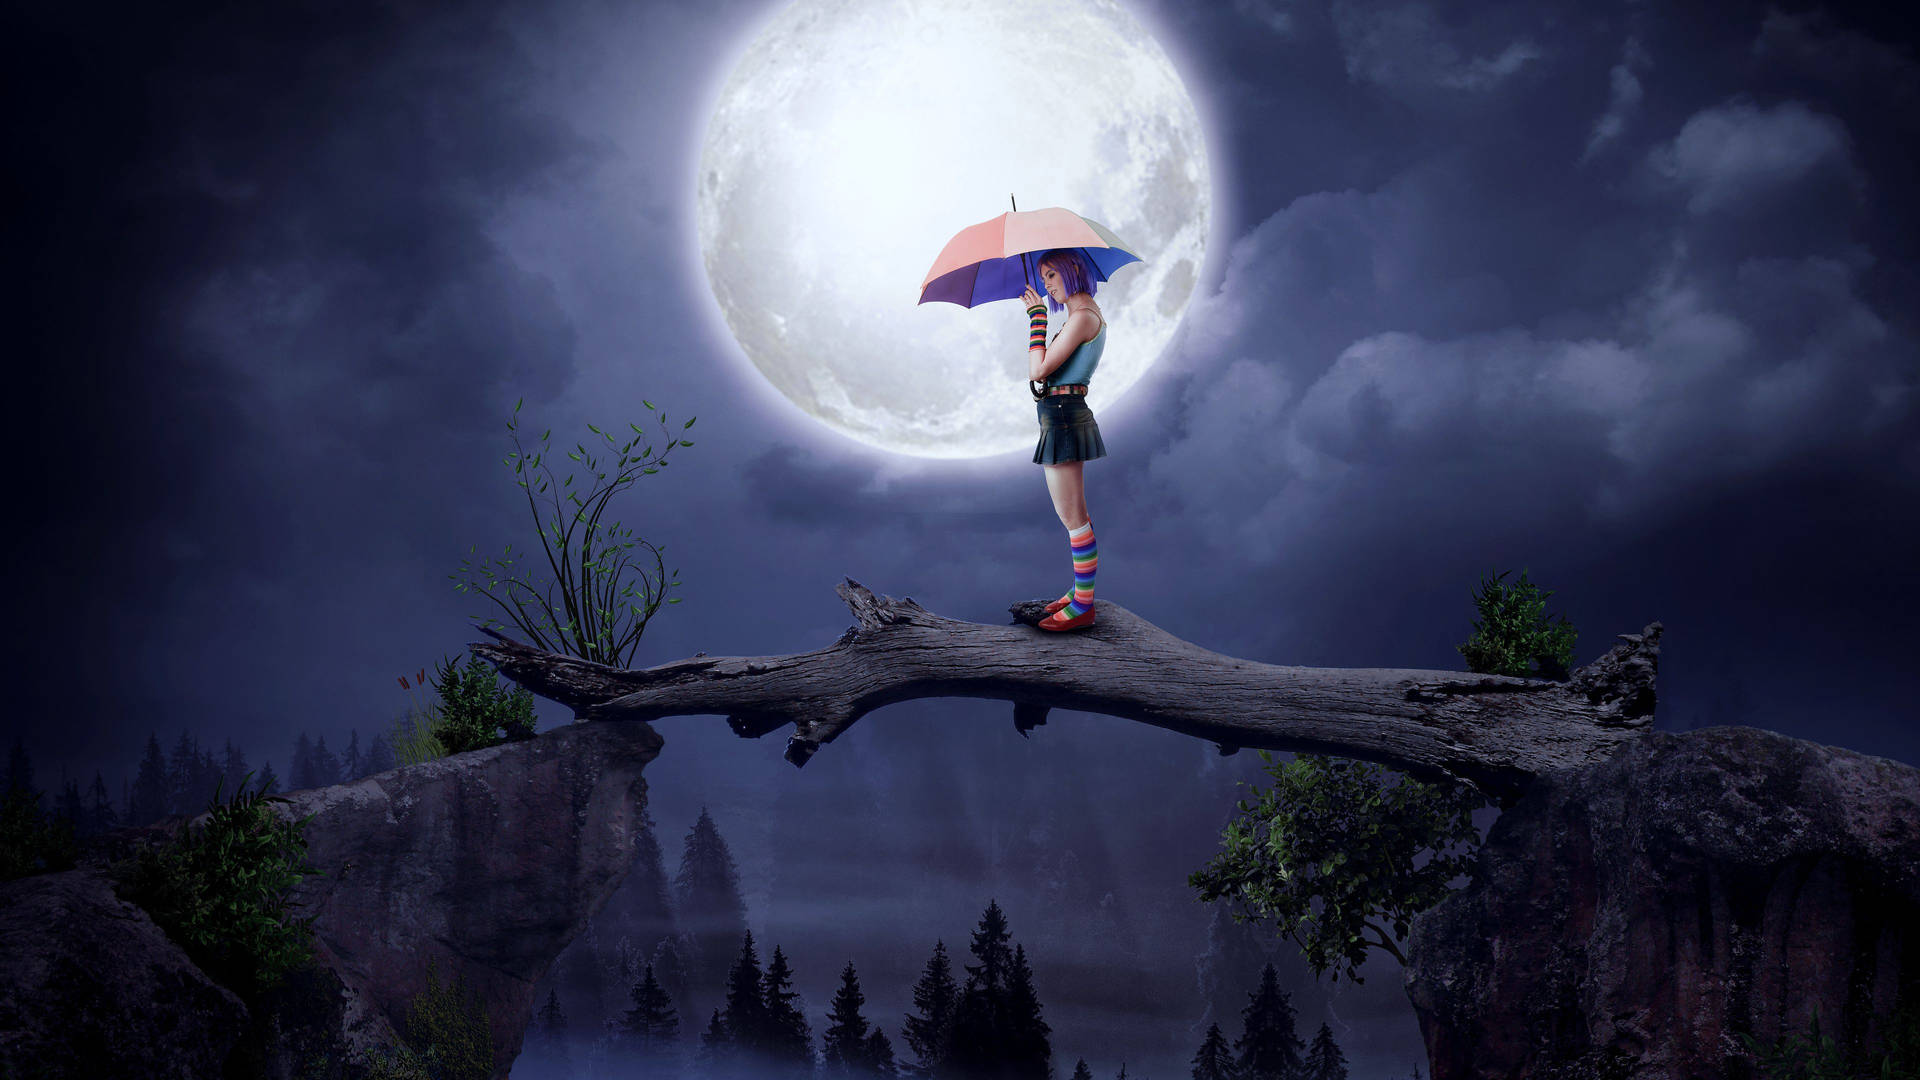 Moon 4k Woman On Log With Umbrella